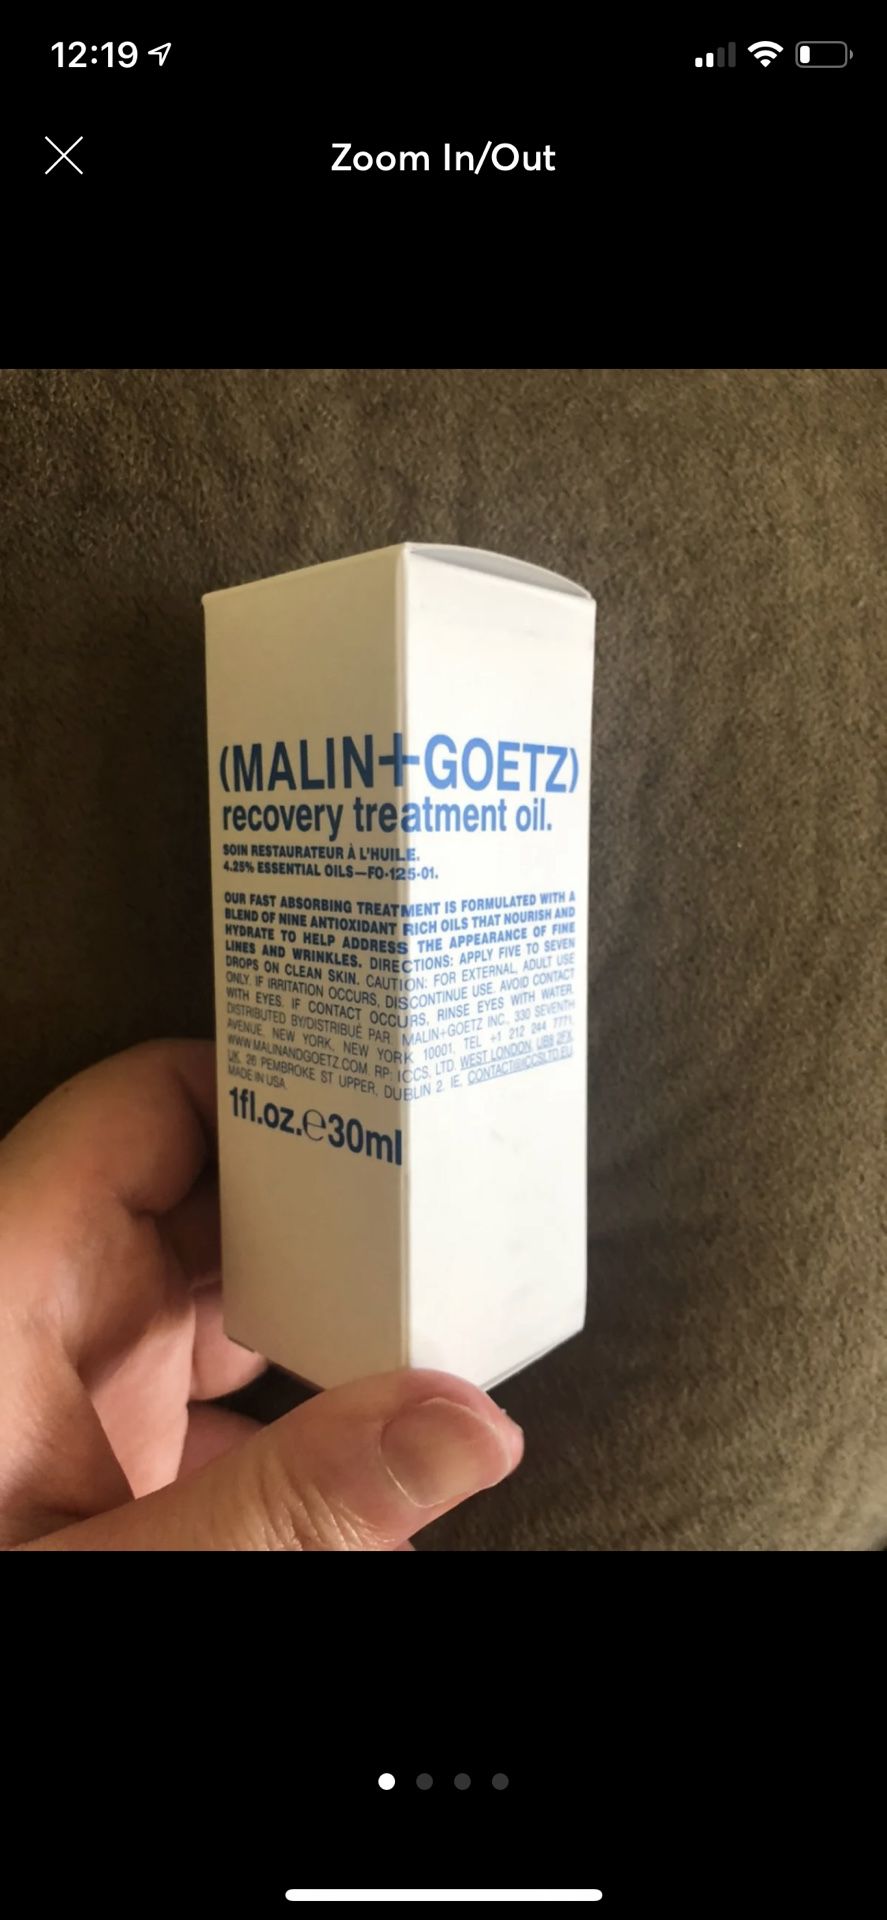 Malik Goetz Recovery treatment oil